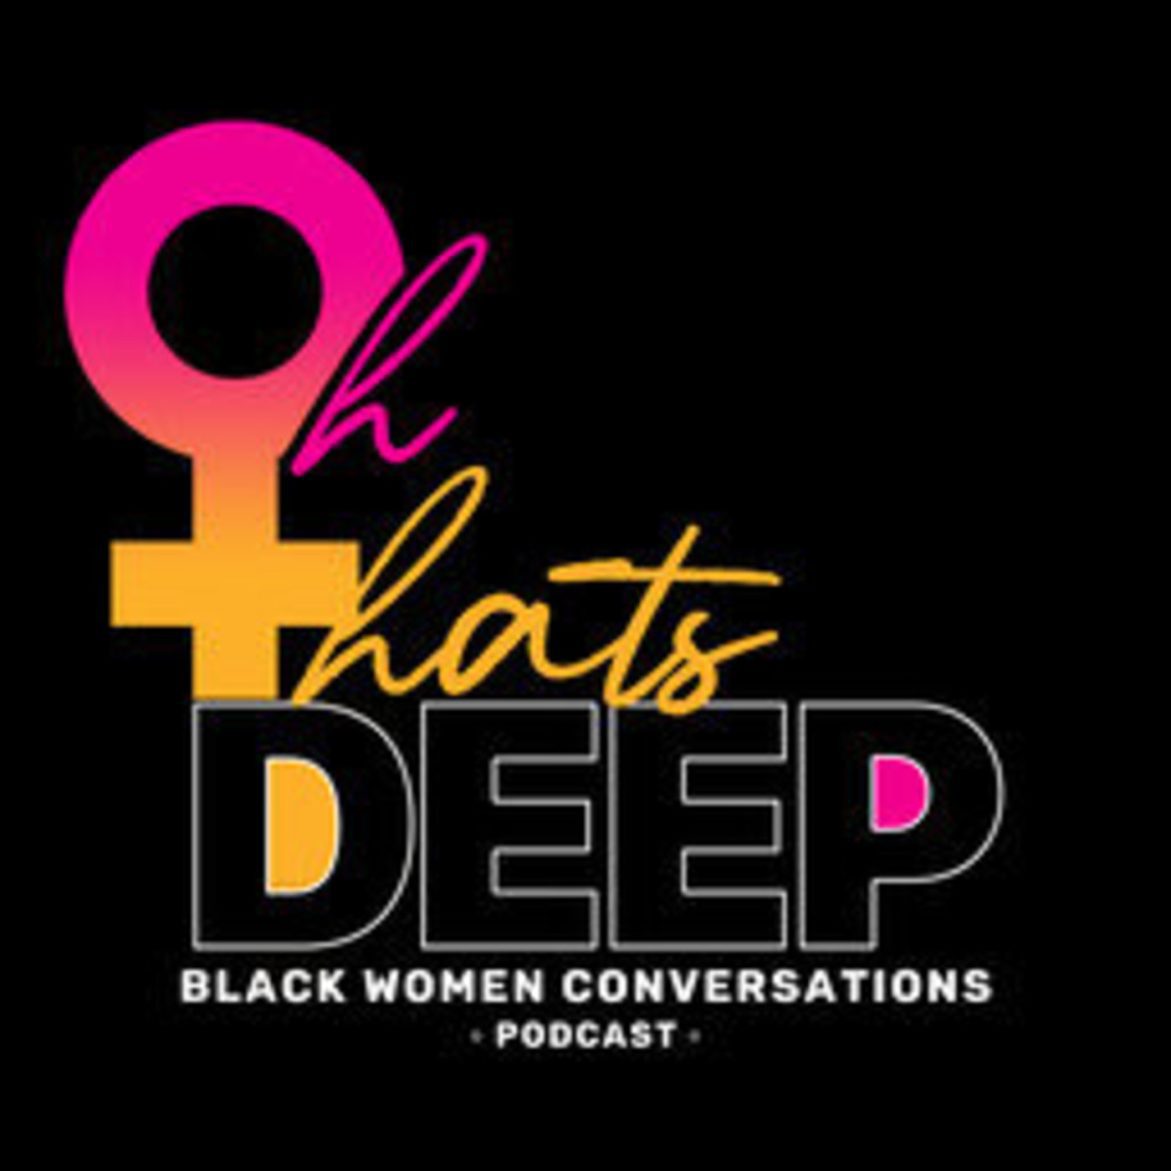 Black Podcasting - Reset